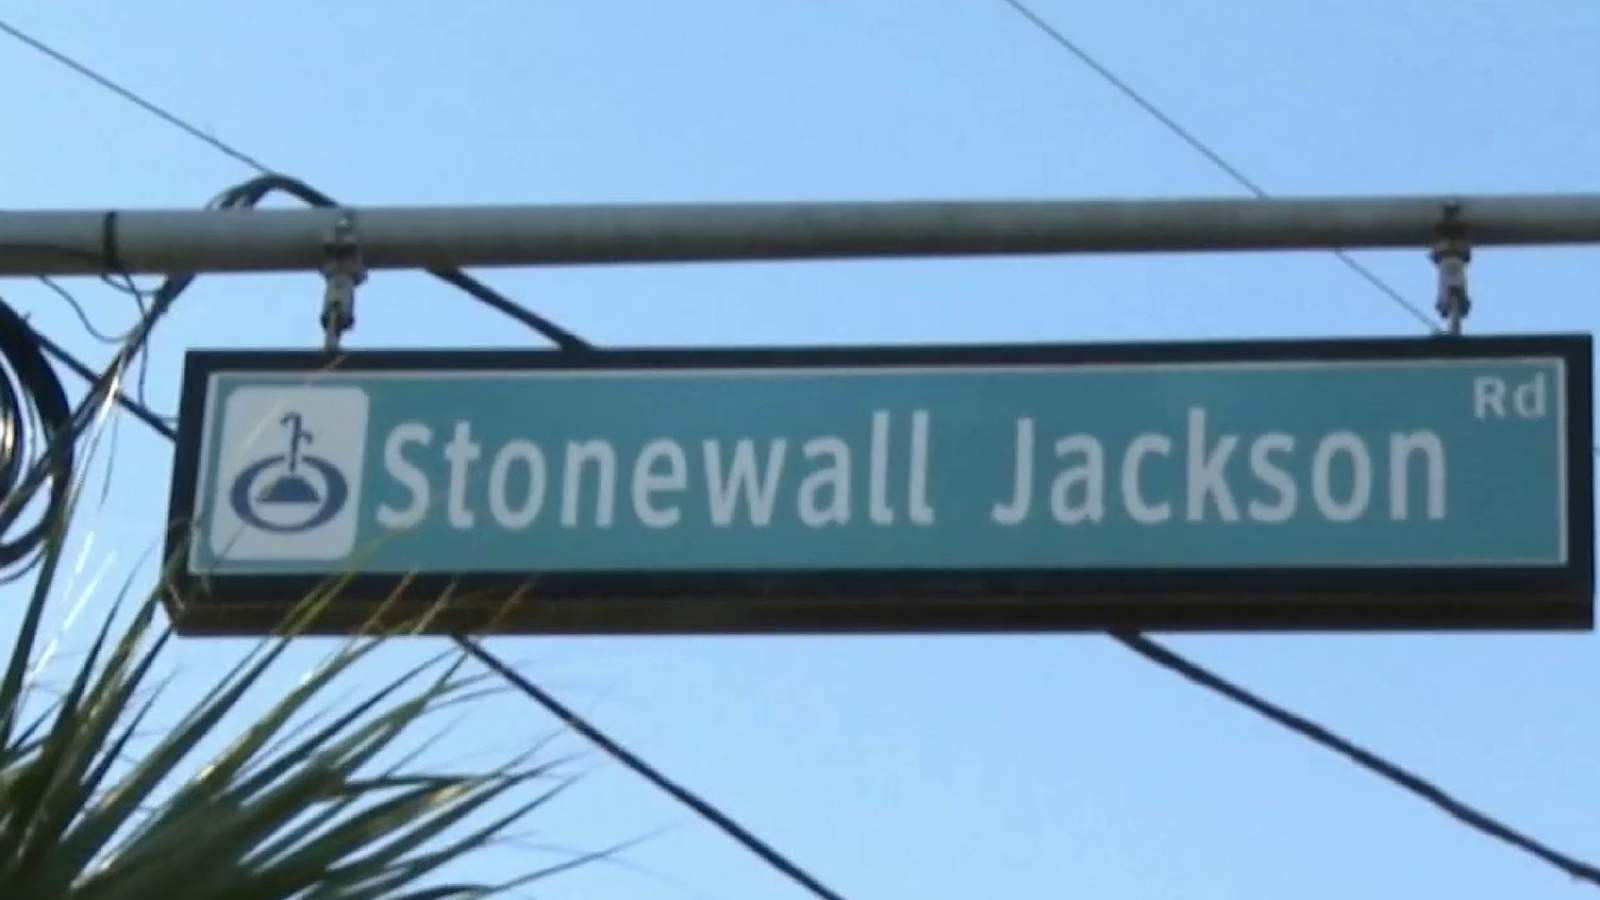 Orlando city leaders approve renaming of Stonewall Jackson Road